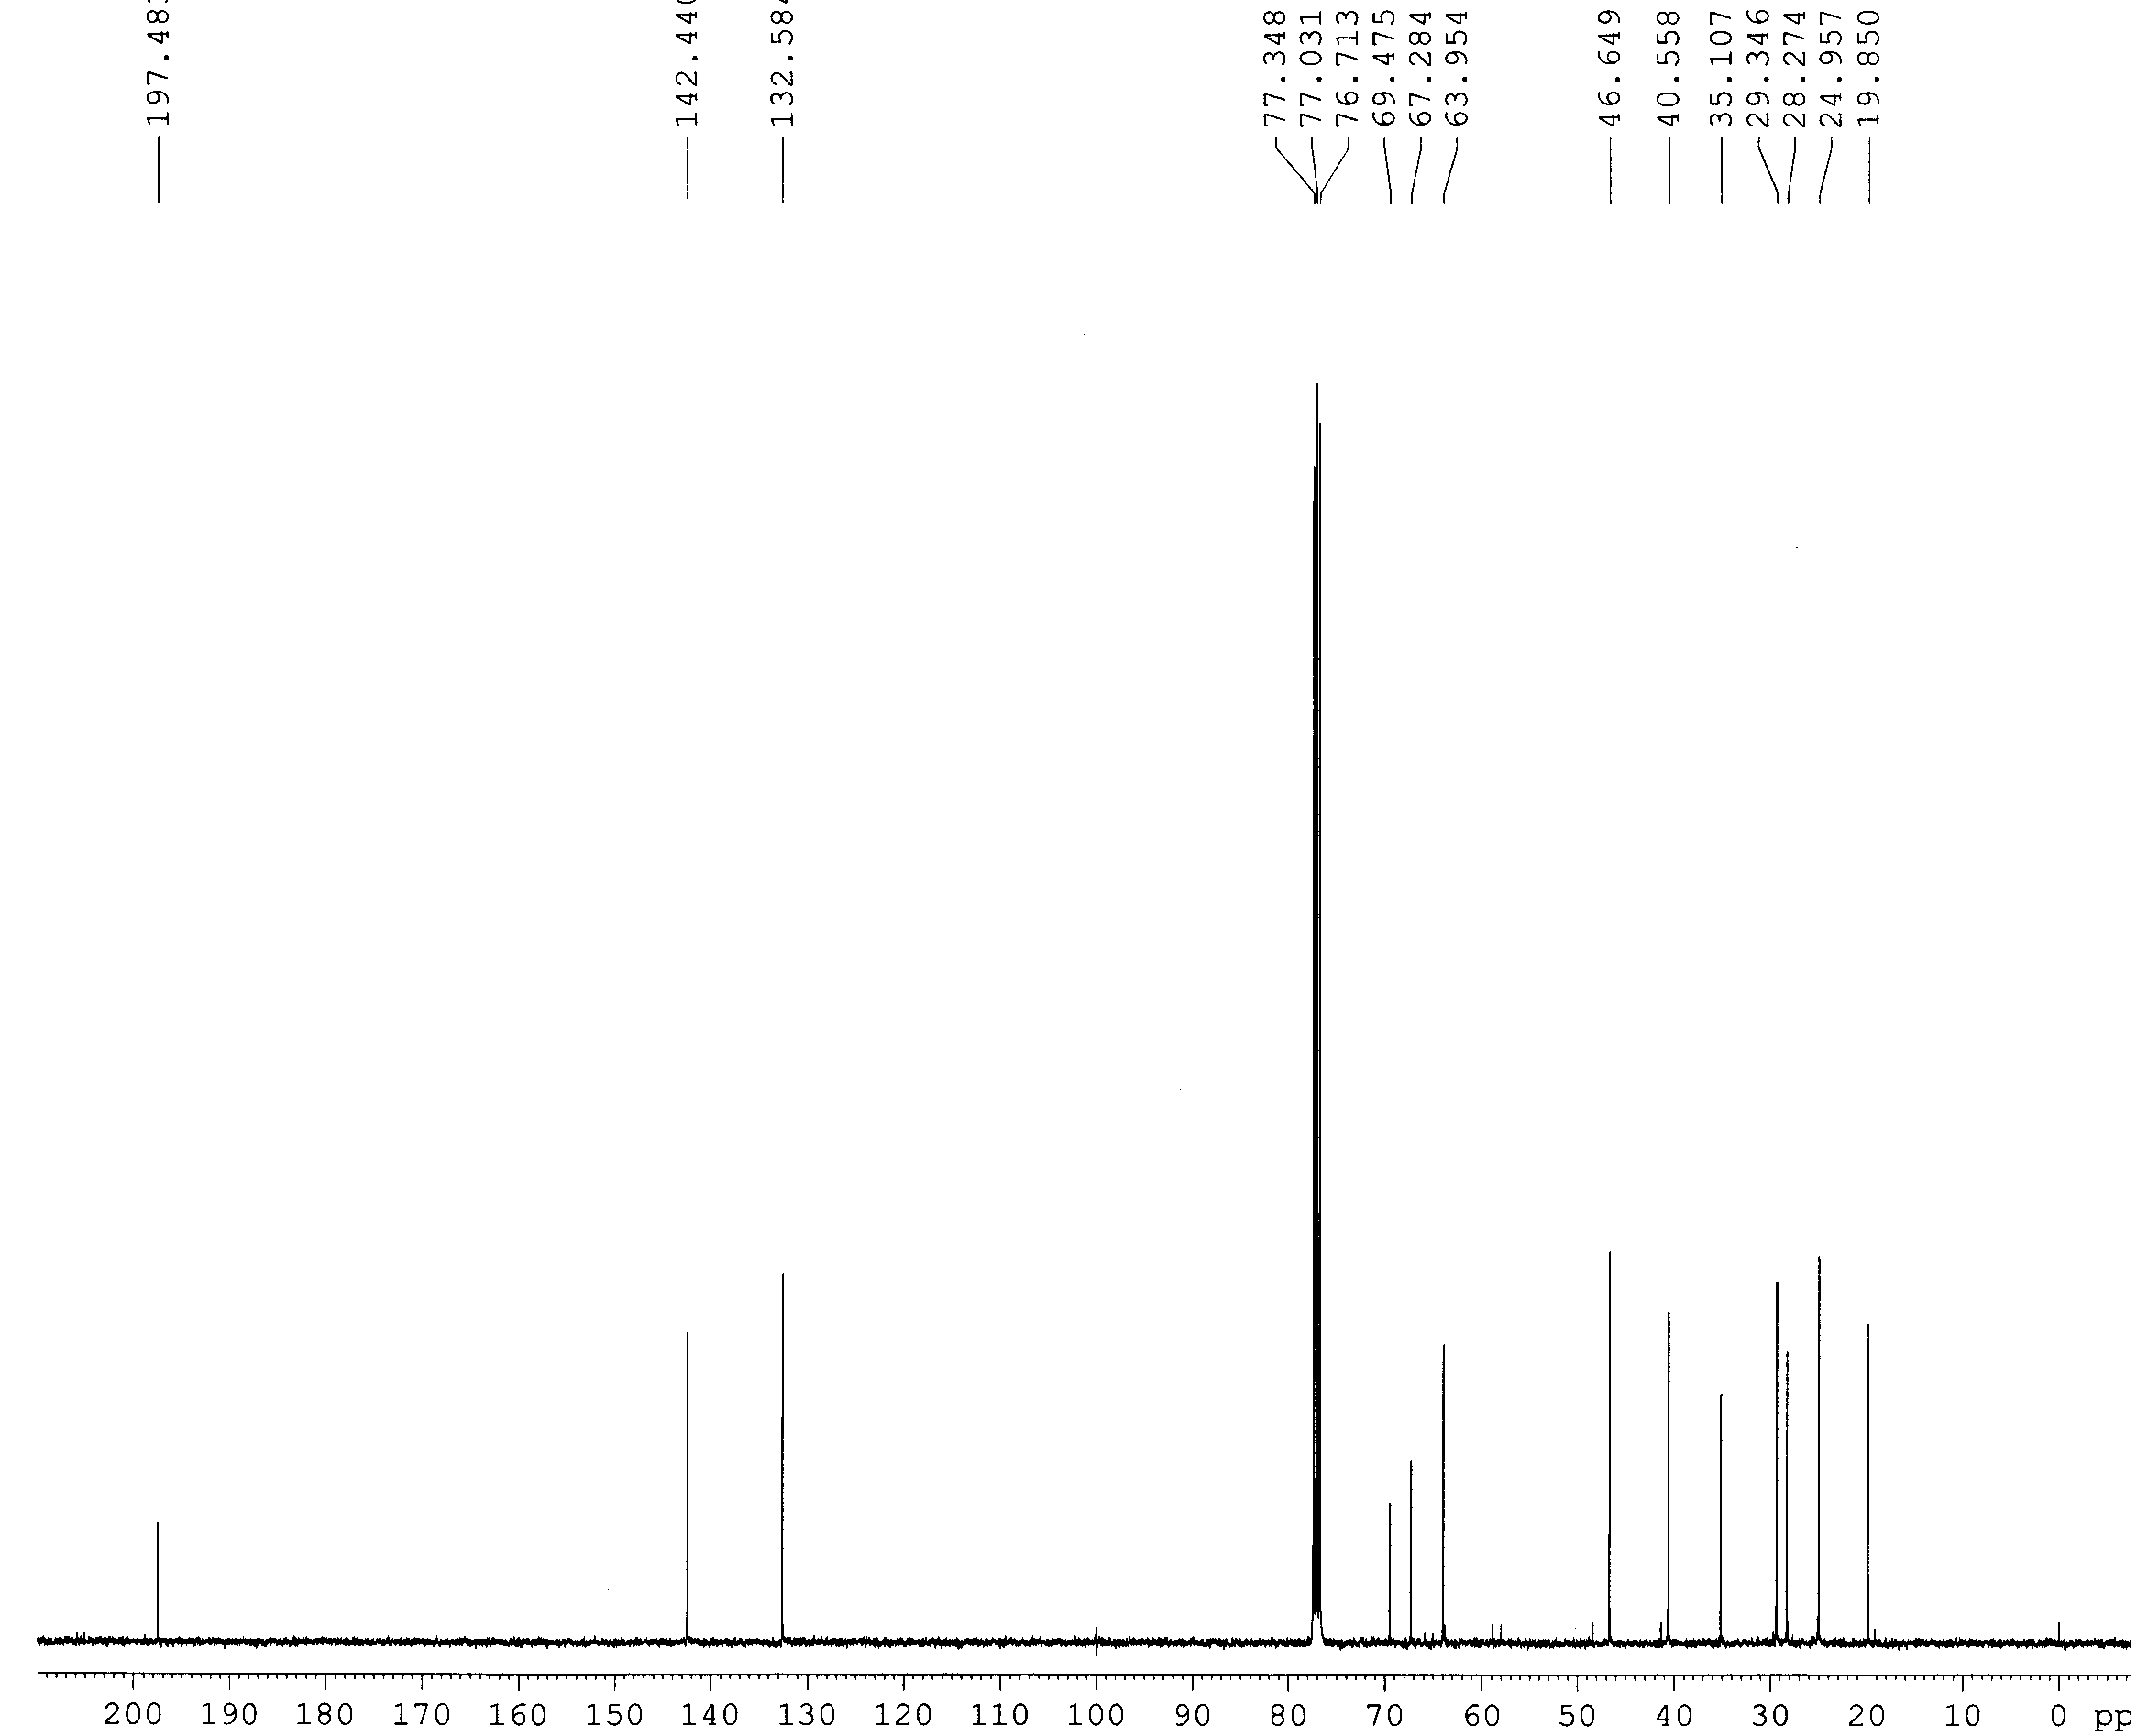 13C-NMR spectrum of compound 7